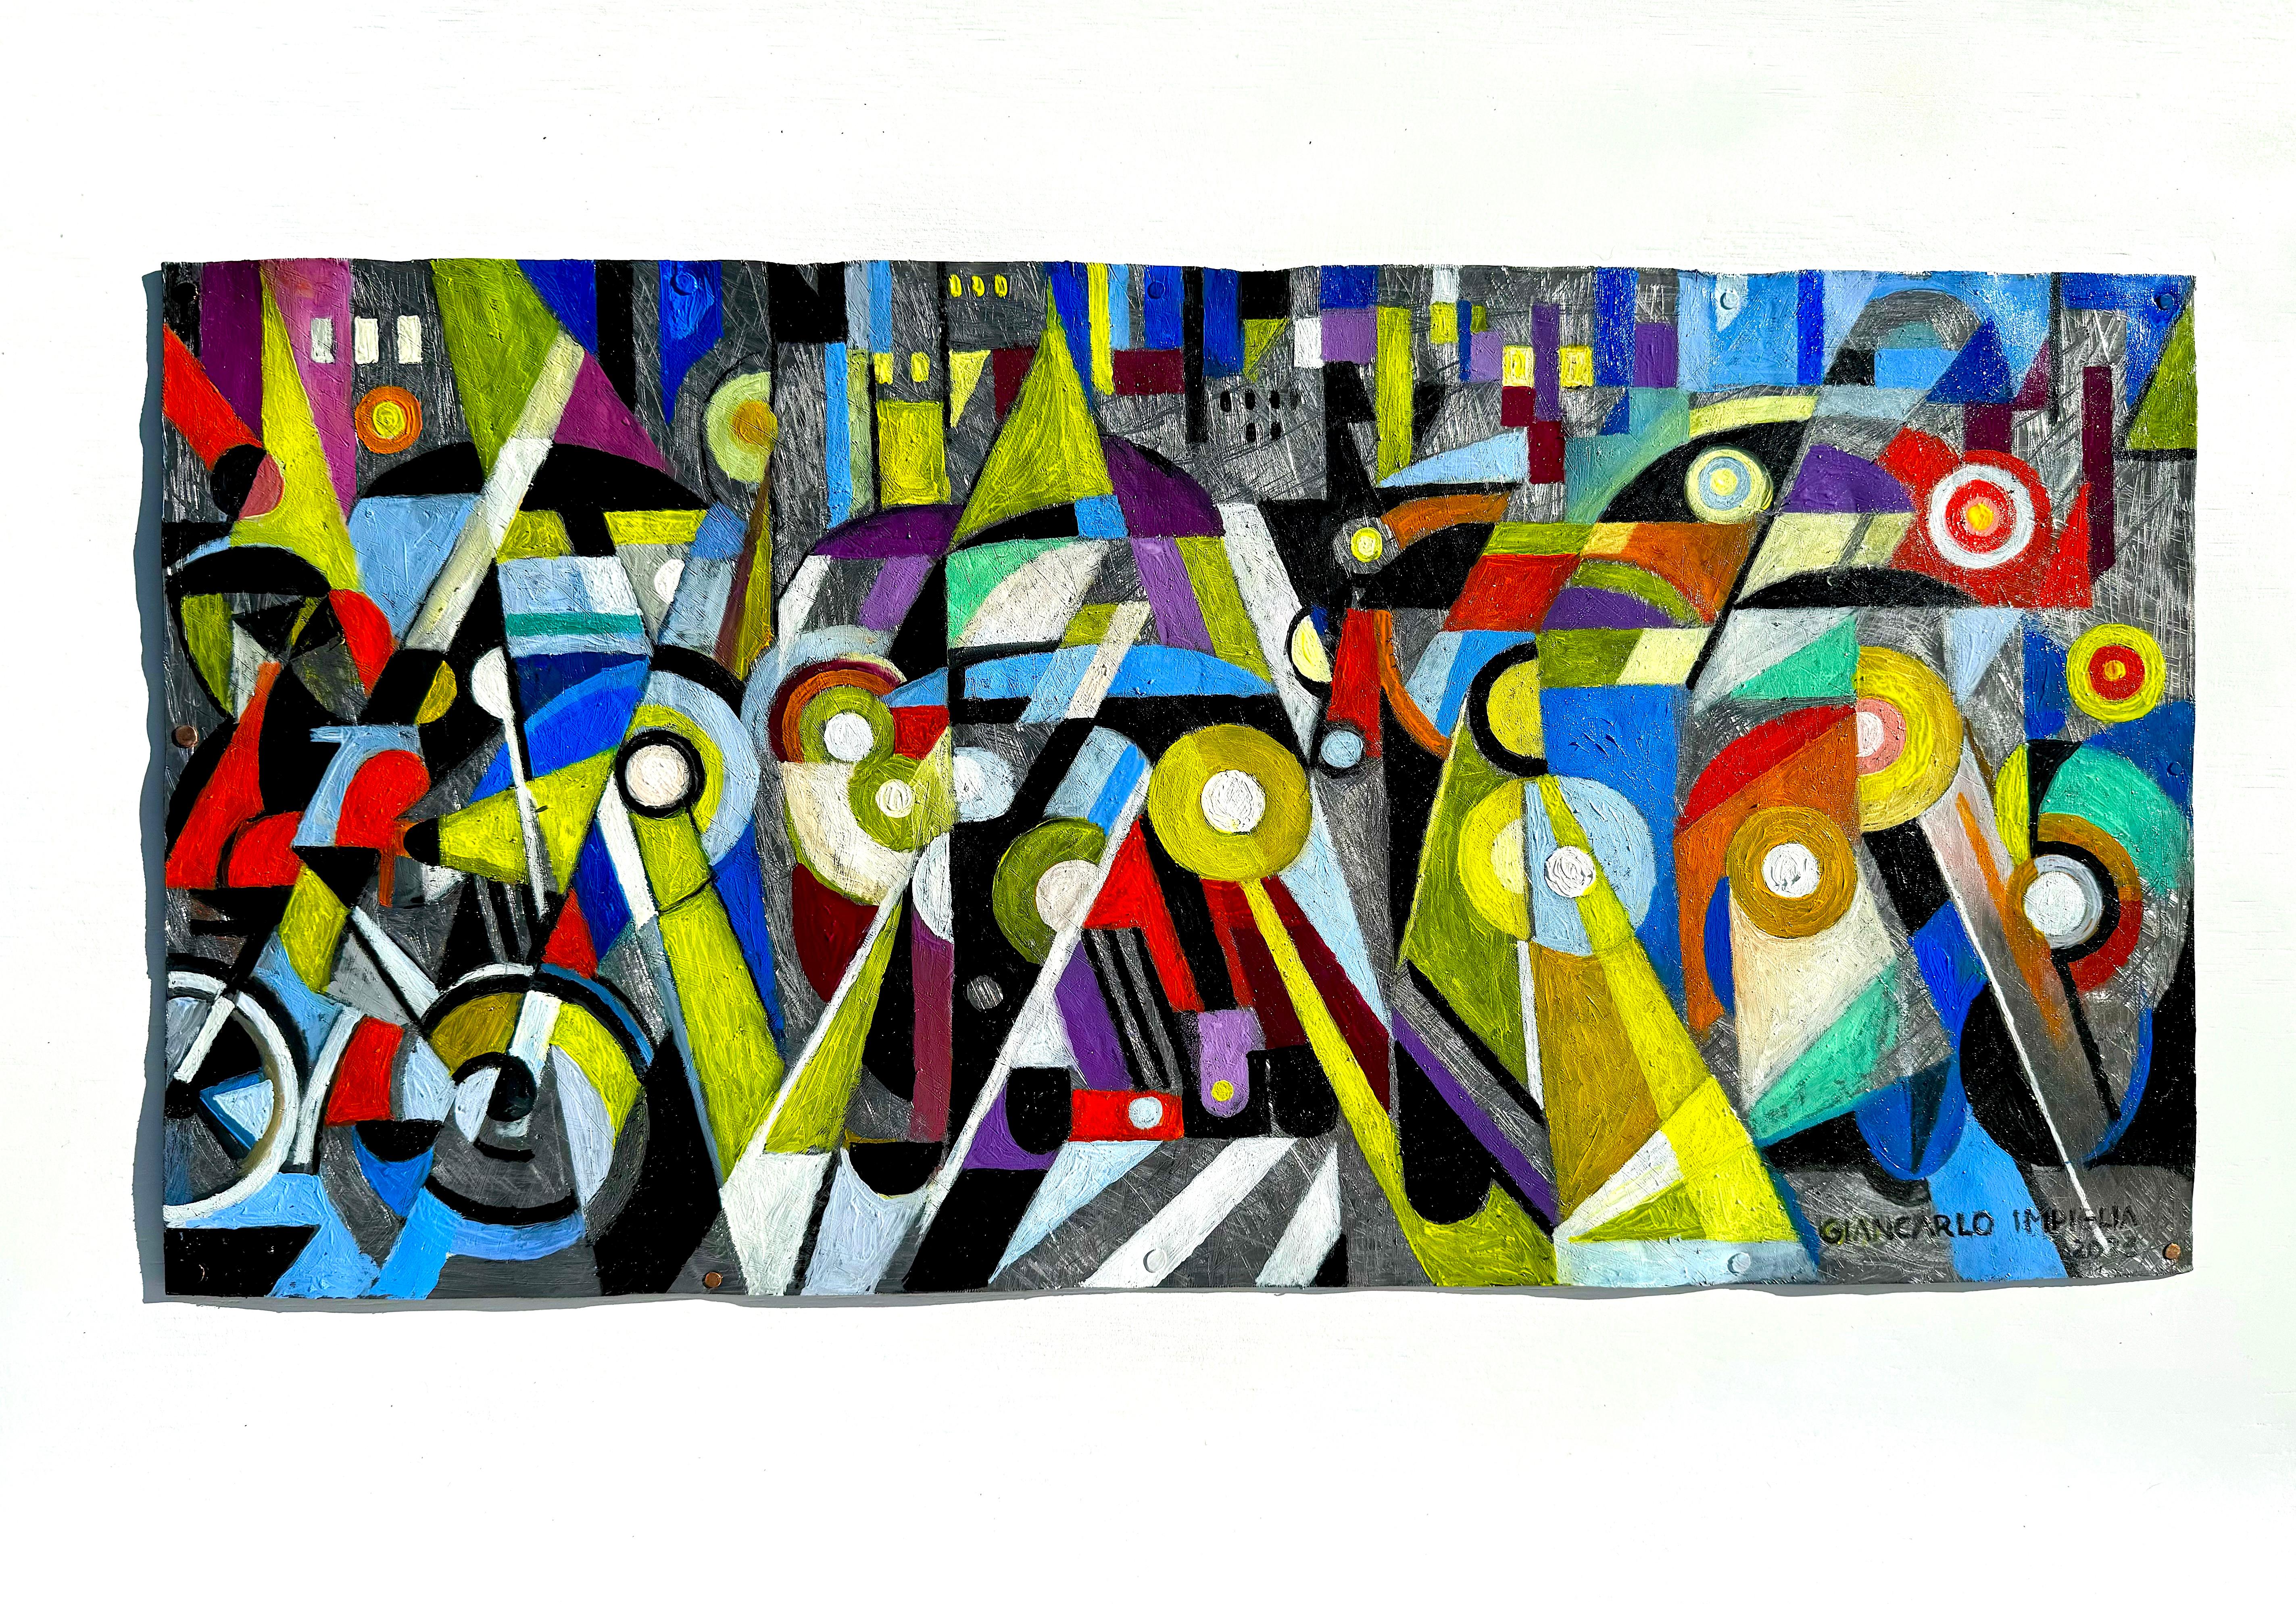 Giancarlo Impiglia Figurative Painting - Modern art, cubist, metal, art deco work "Traffic" 